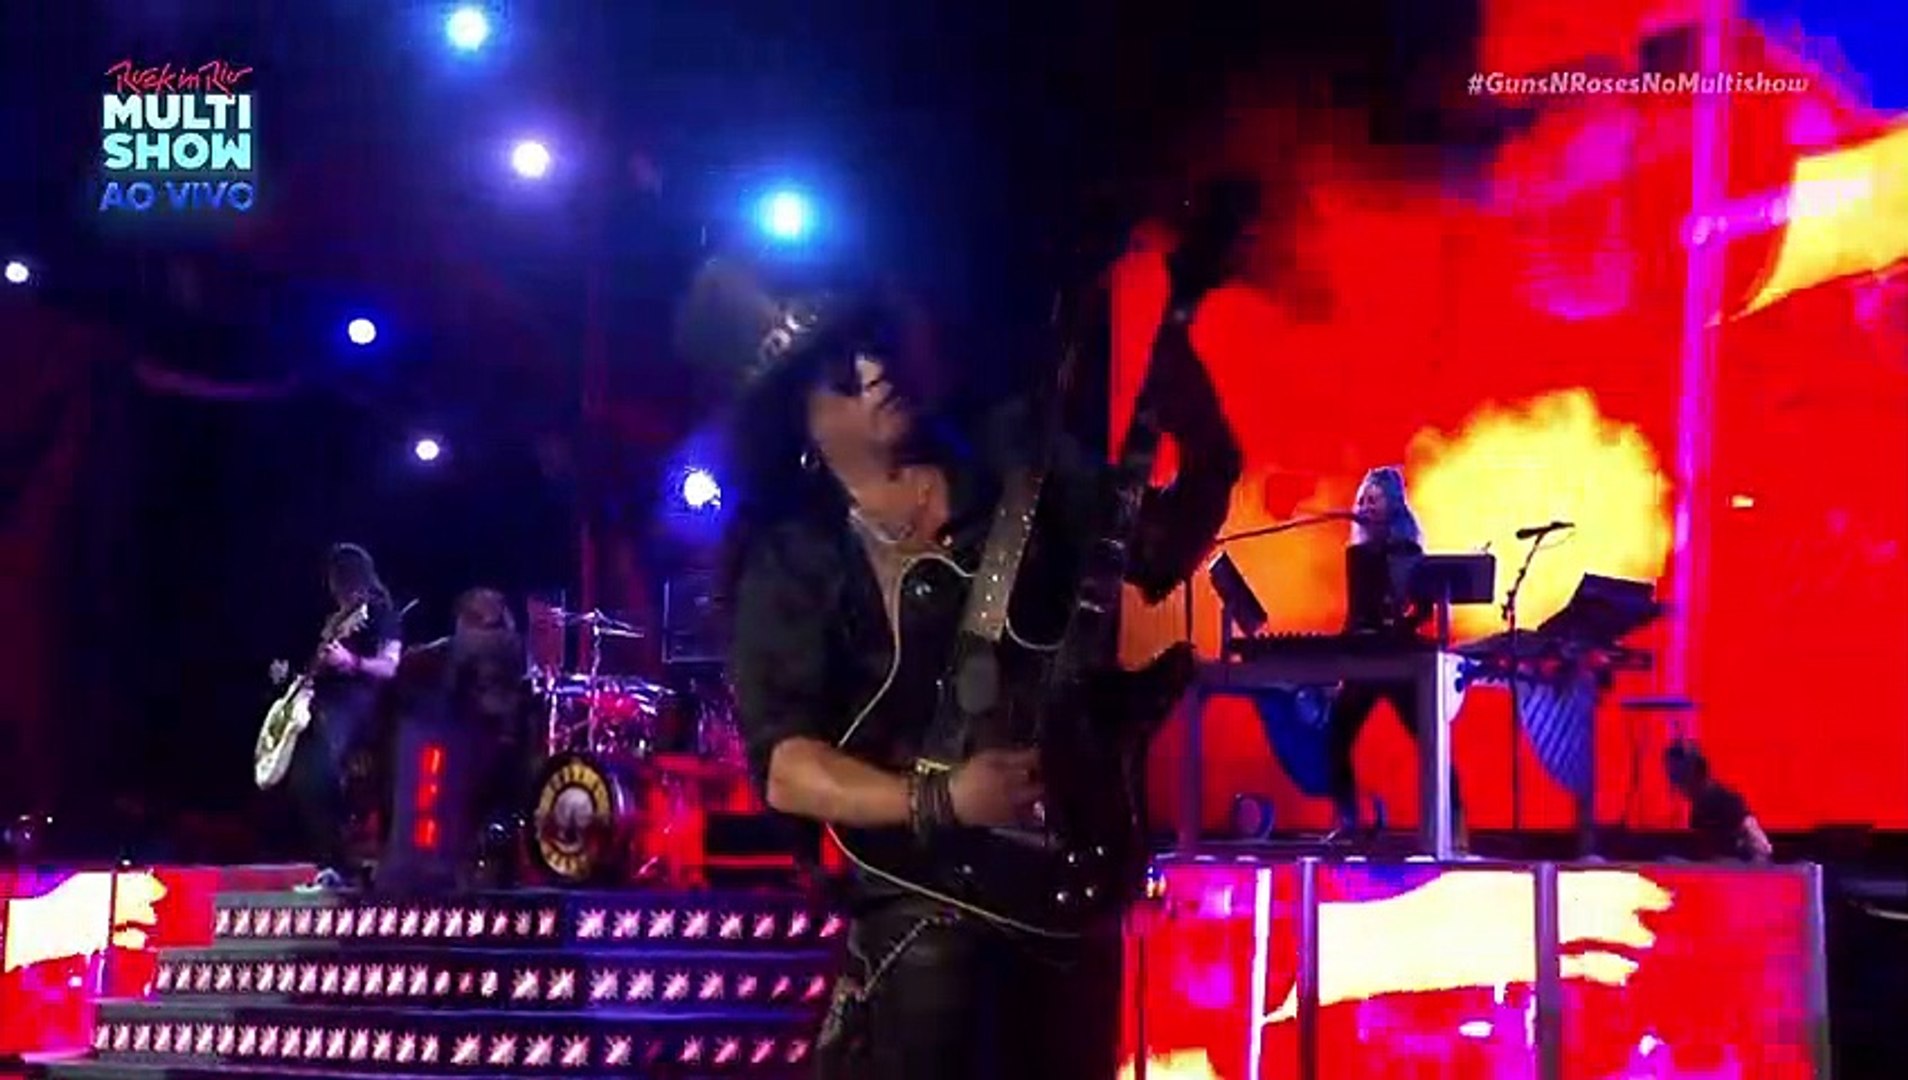 Civil War - Live - song and lyrics by Guns N' Roses